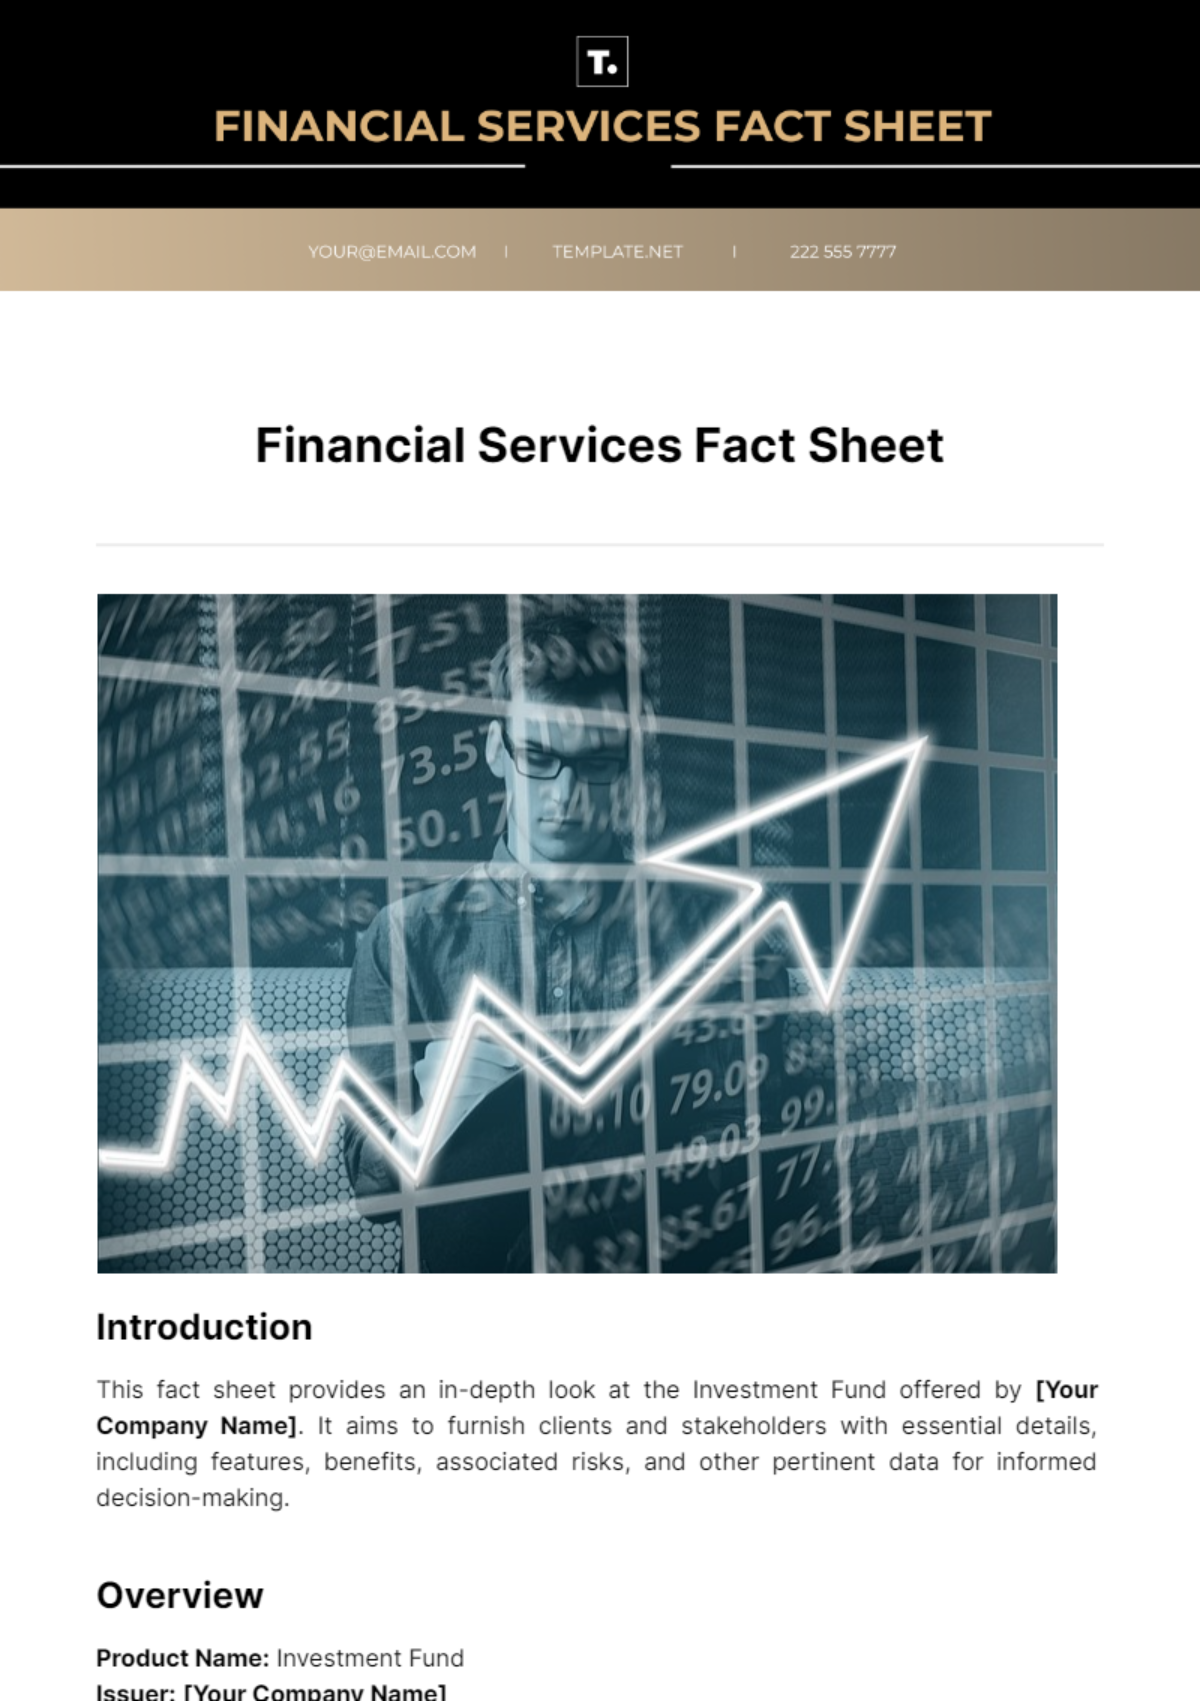 Financial Services Fact Sheet Template